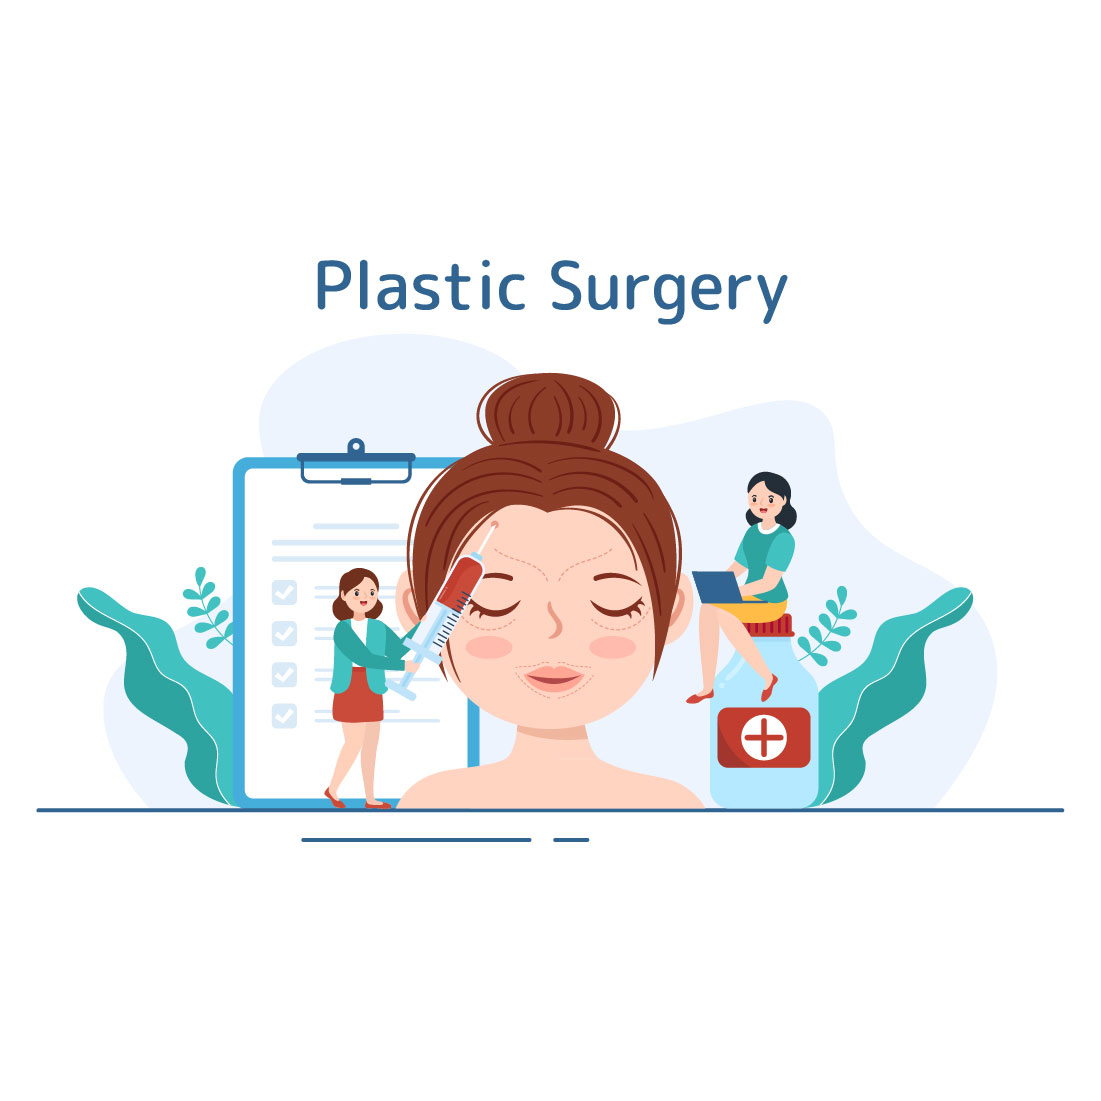 Medical Plastic Surgery Flat Illustration cover image.